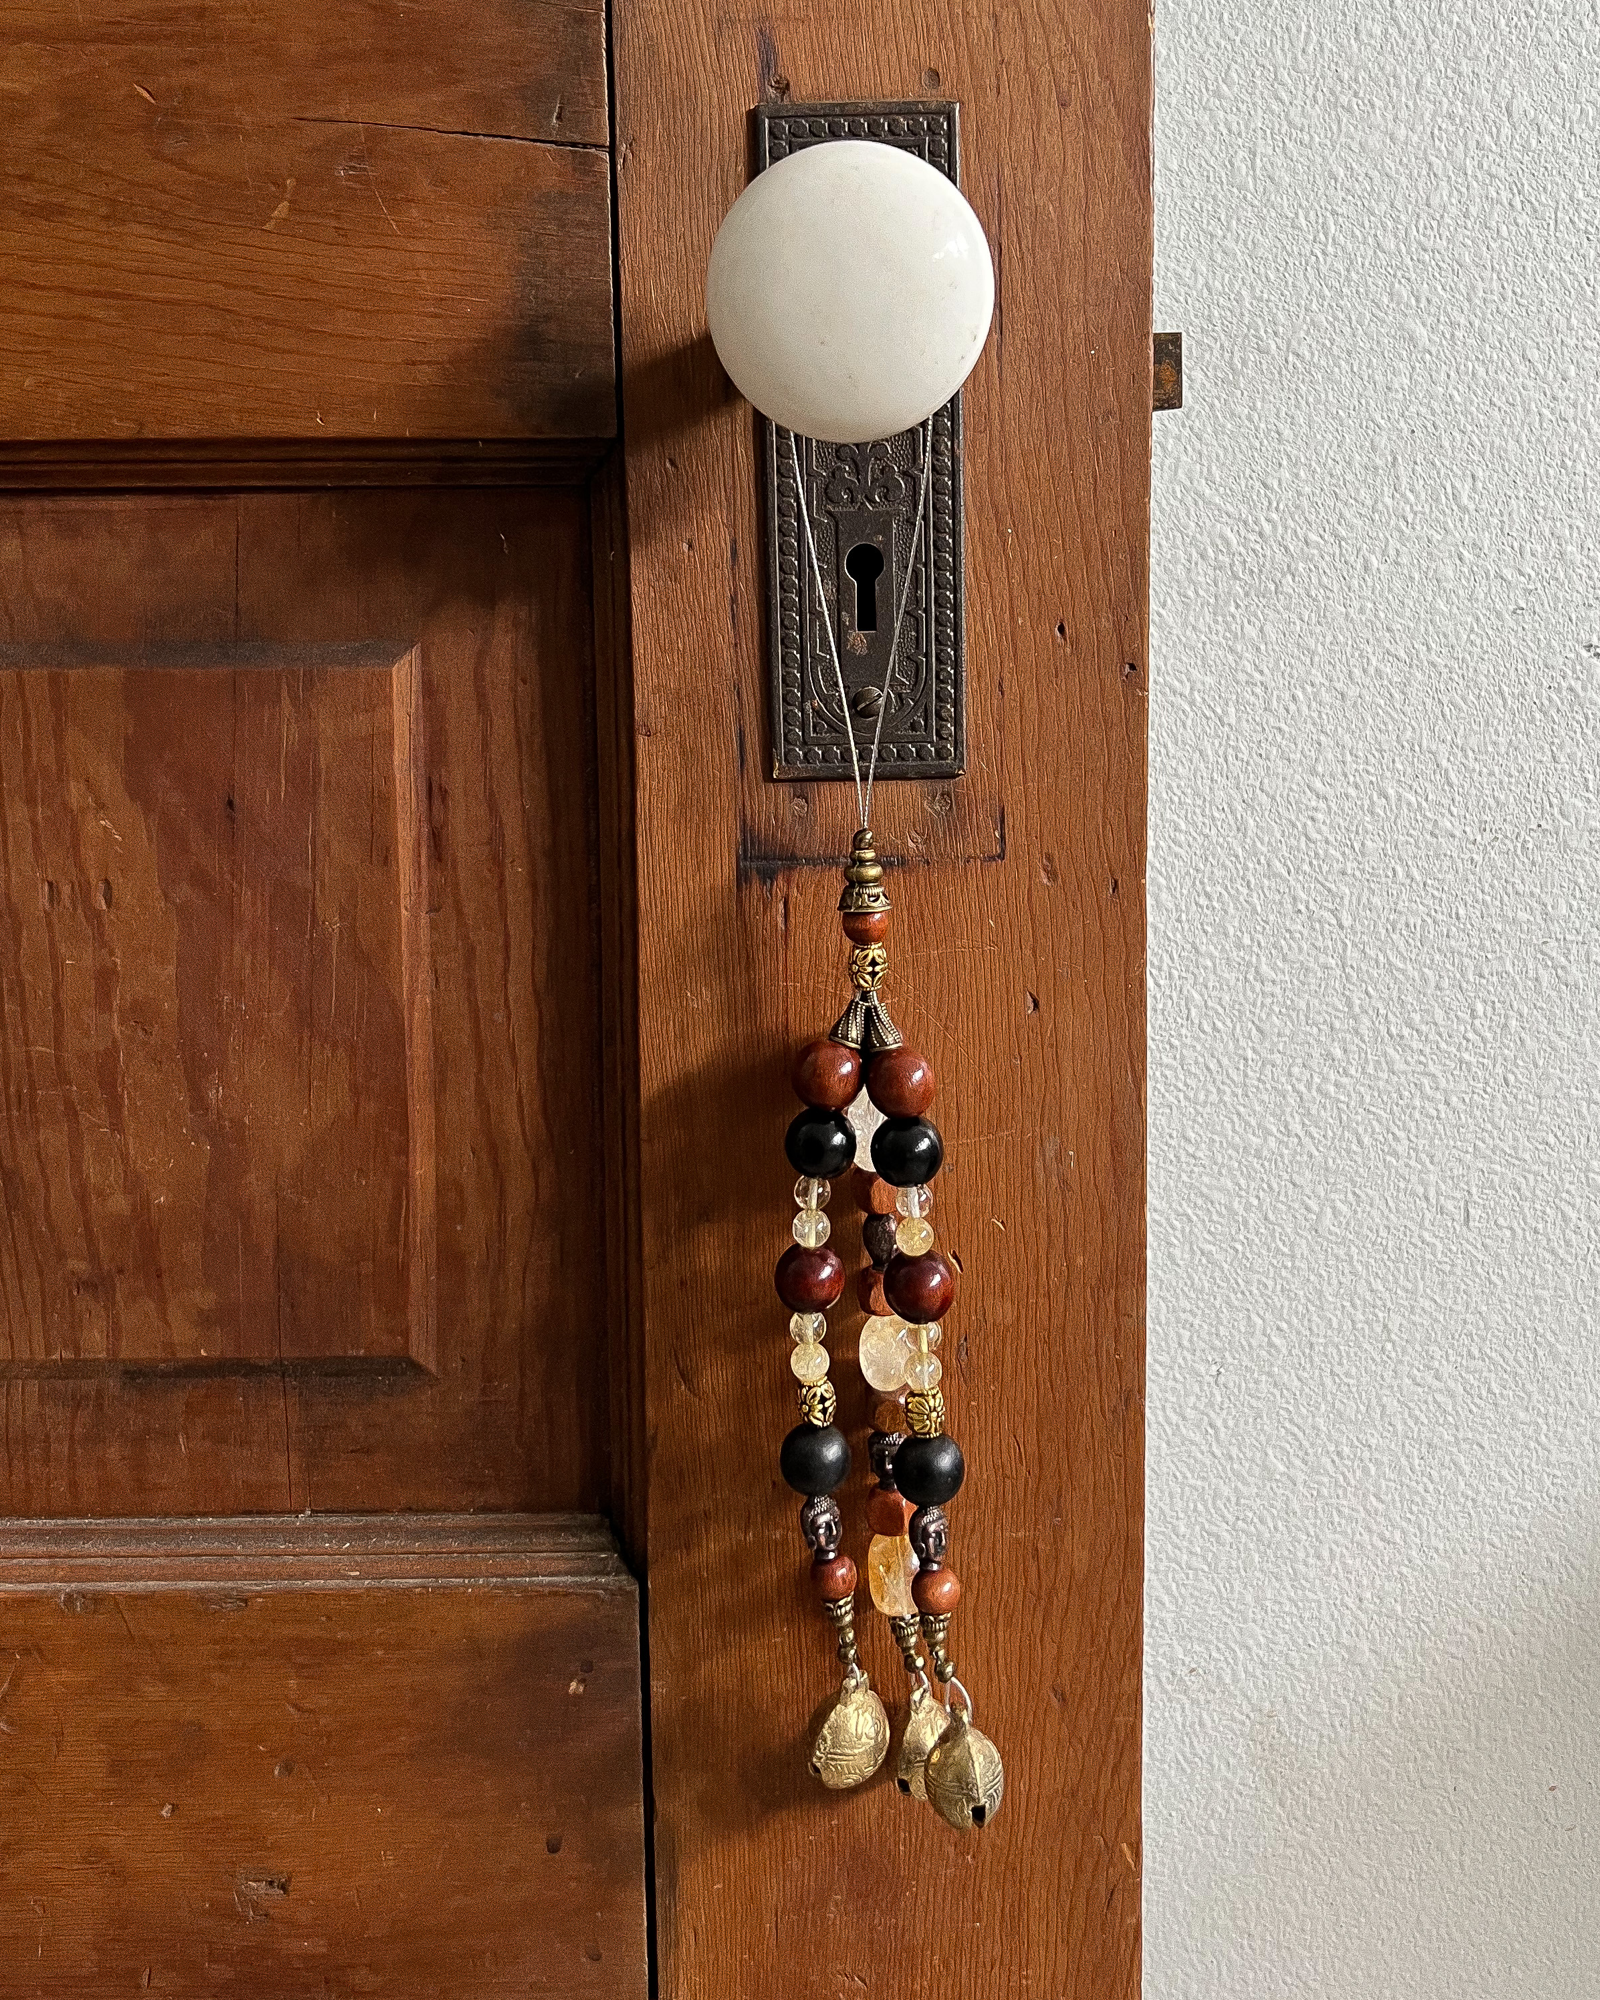 Triple strands of wooden bells, citrine crystals, metallic buddhas, and three golden bells hanging from an antique doorknob.